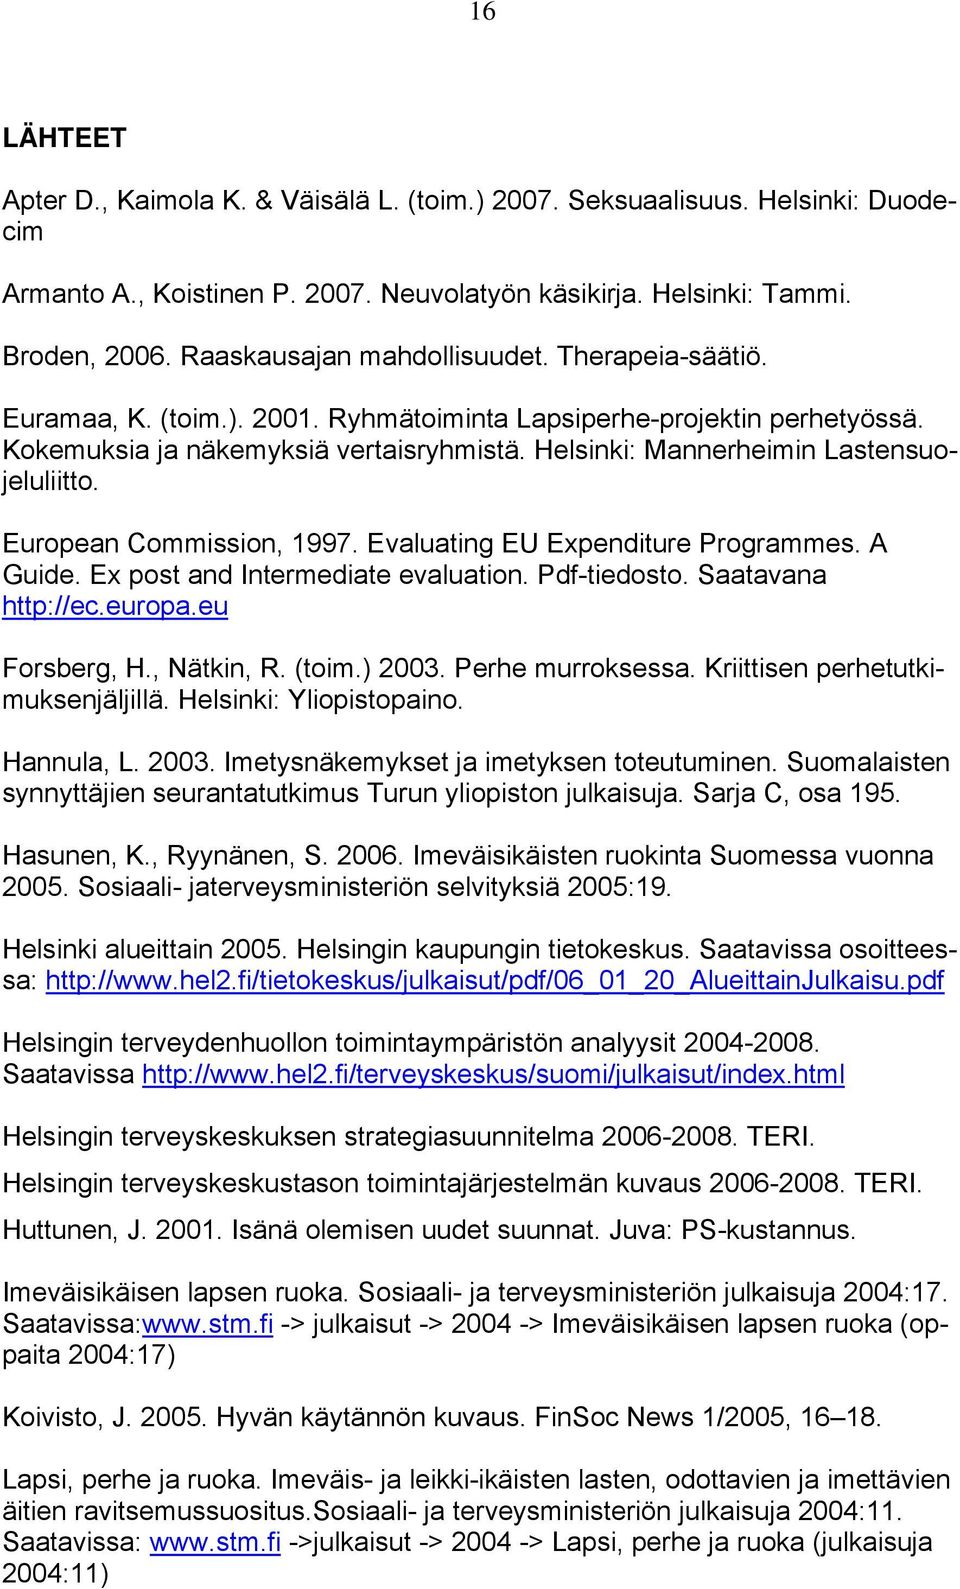 Helsinki: Mannerheimin Lastensuojeluliitto. European Commission, 1997. Evaluating EU Expenditure Programmes. A Guide. Ex post and Intermediate evaluation. Pdf-tiedosto. Saatavana http://ec.europa.